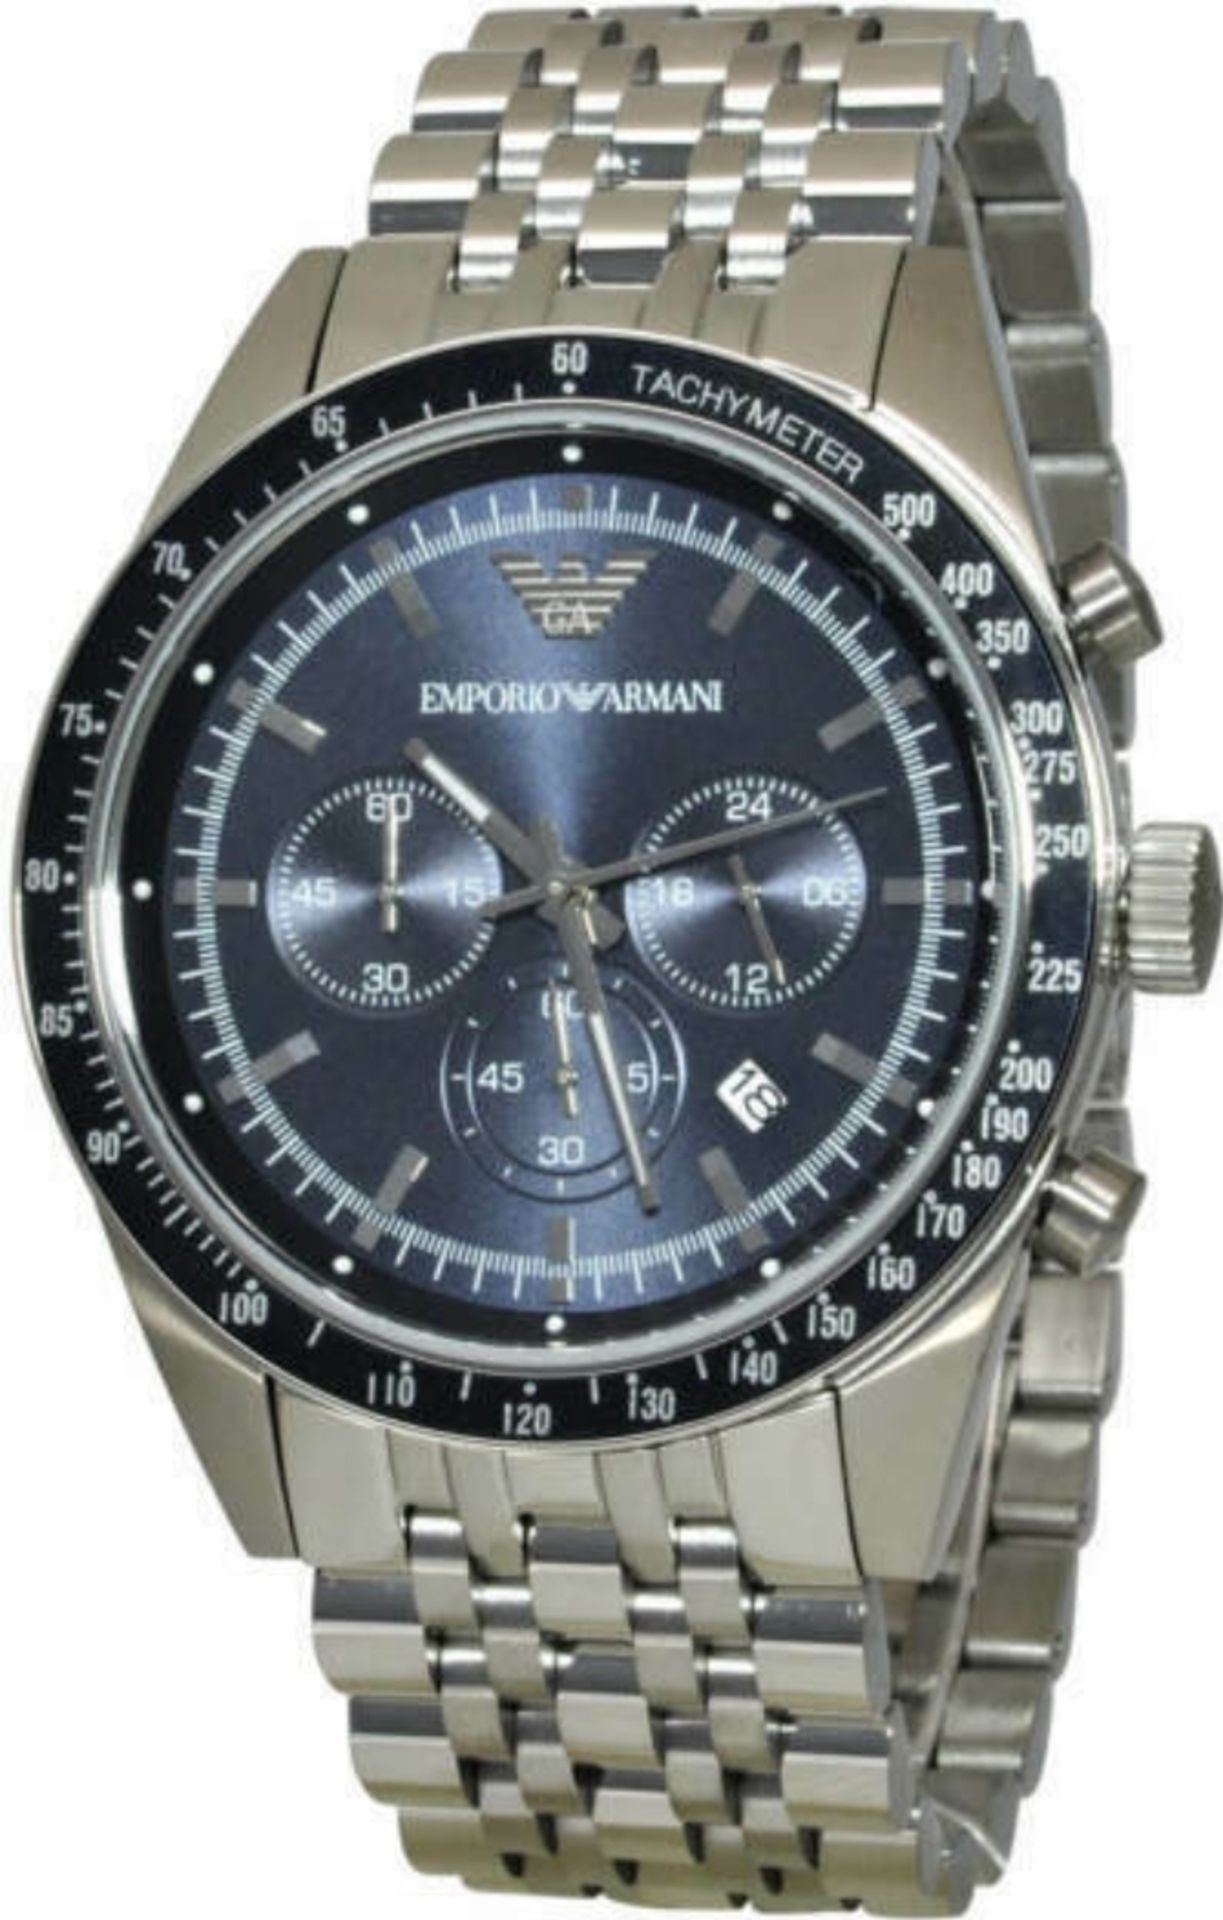 Emporio Armani AR6072 Men's Quartz Chronograph Designer Watch - Image 7 of 9